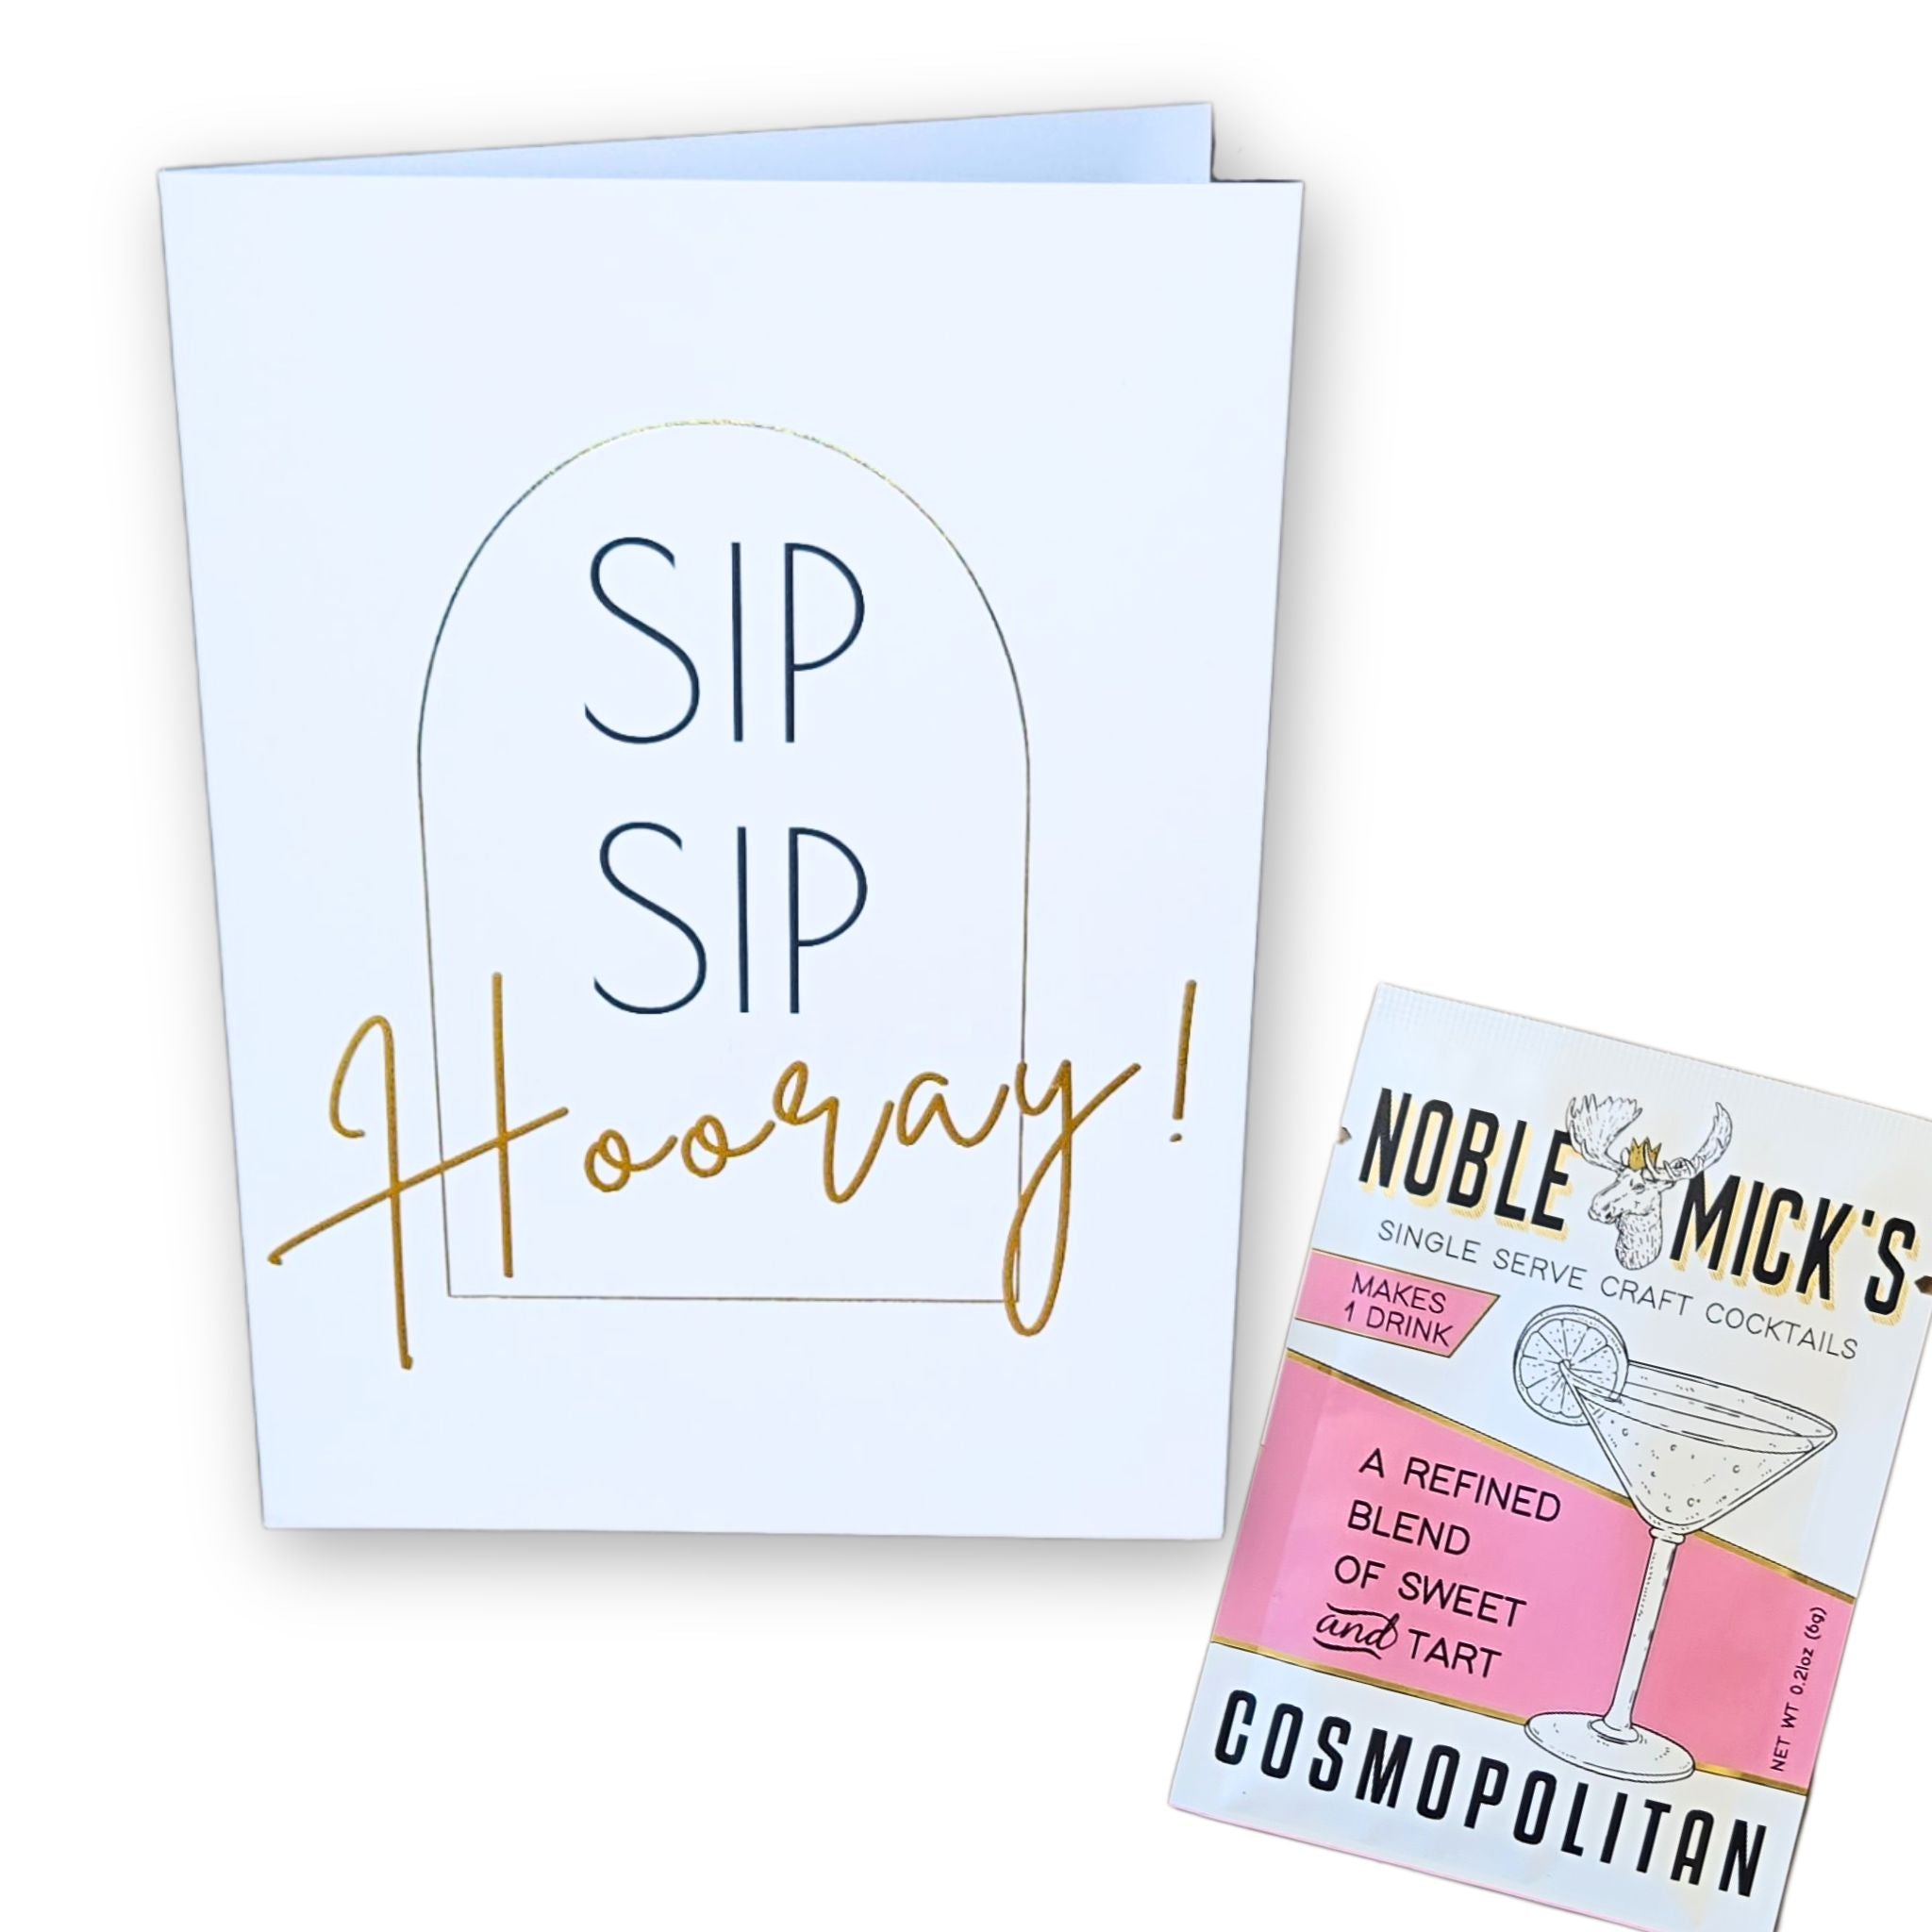 Noble Mick's Sip Sip Hooray Greeting Card & Cosmo